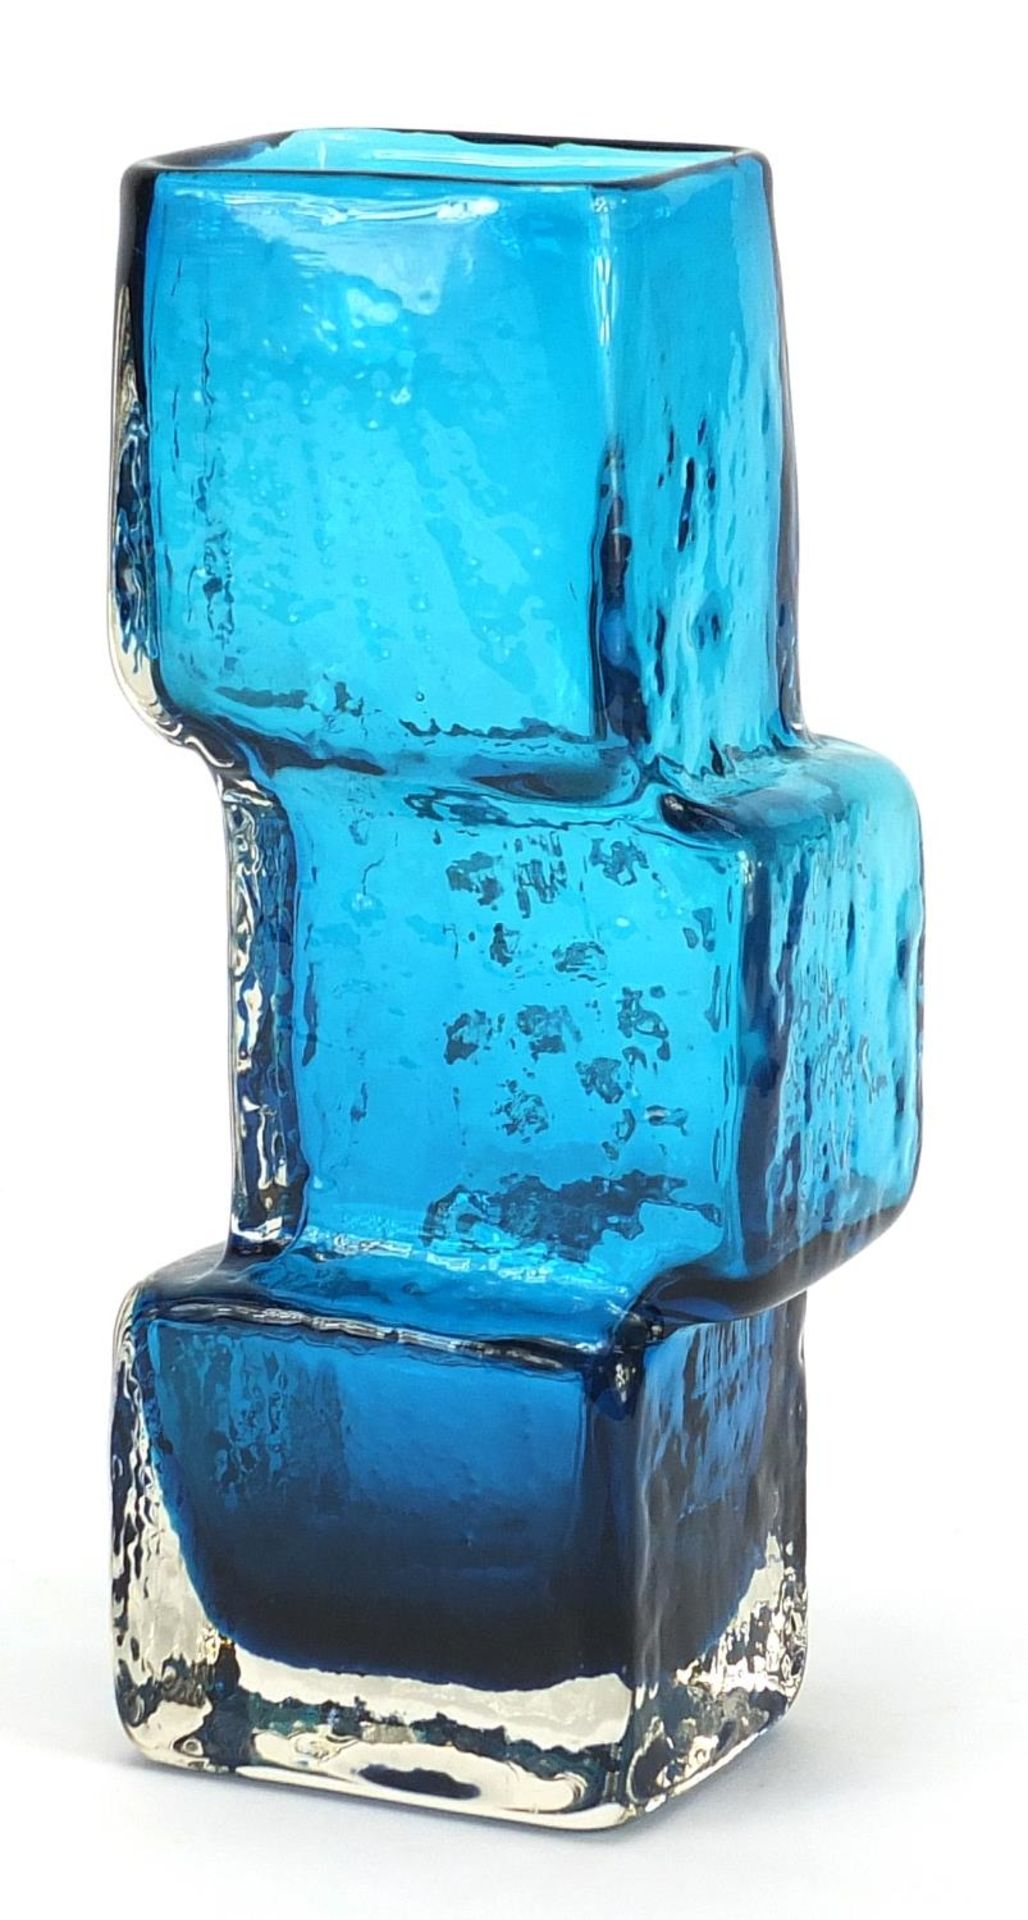 Geoffrey Baxter for Whitefriars, drunken bricklayer glass vase in kingfisher blue, 21cm high - Image 2 of 3